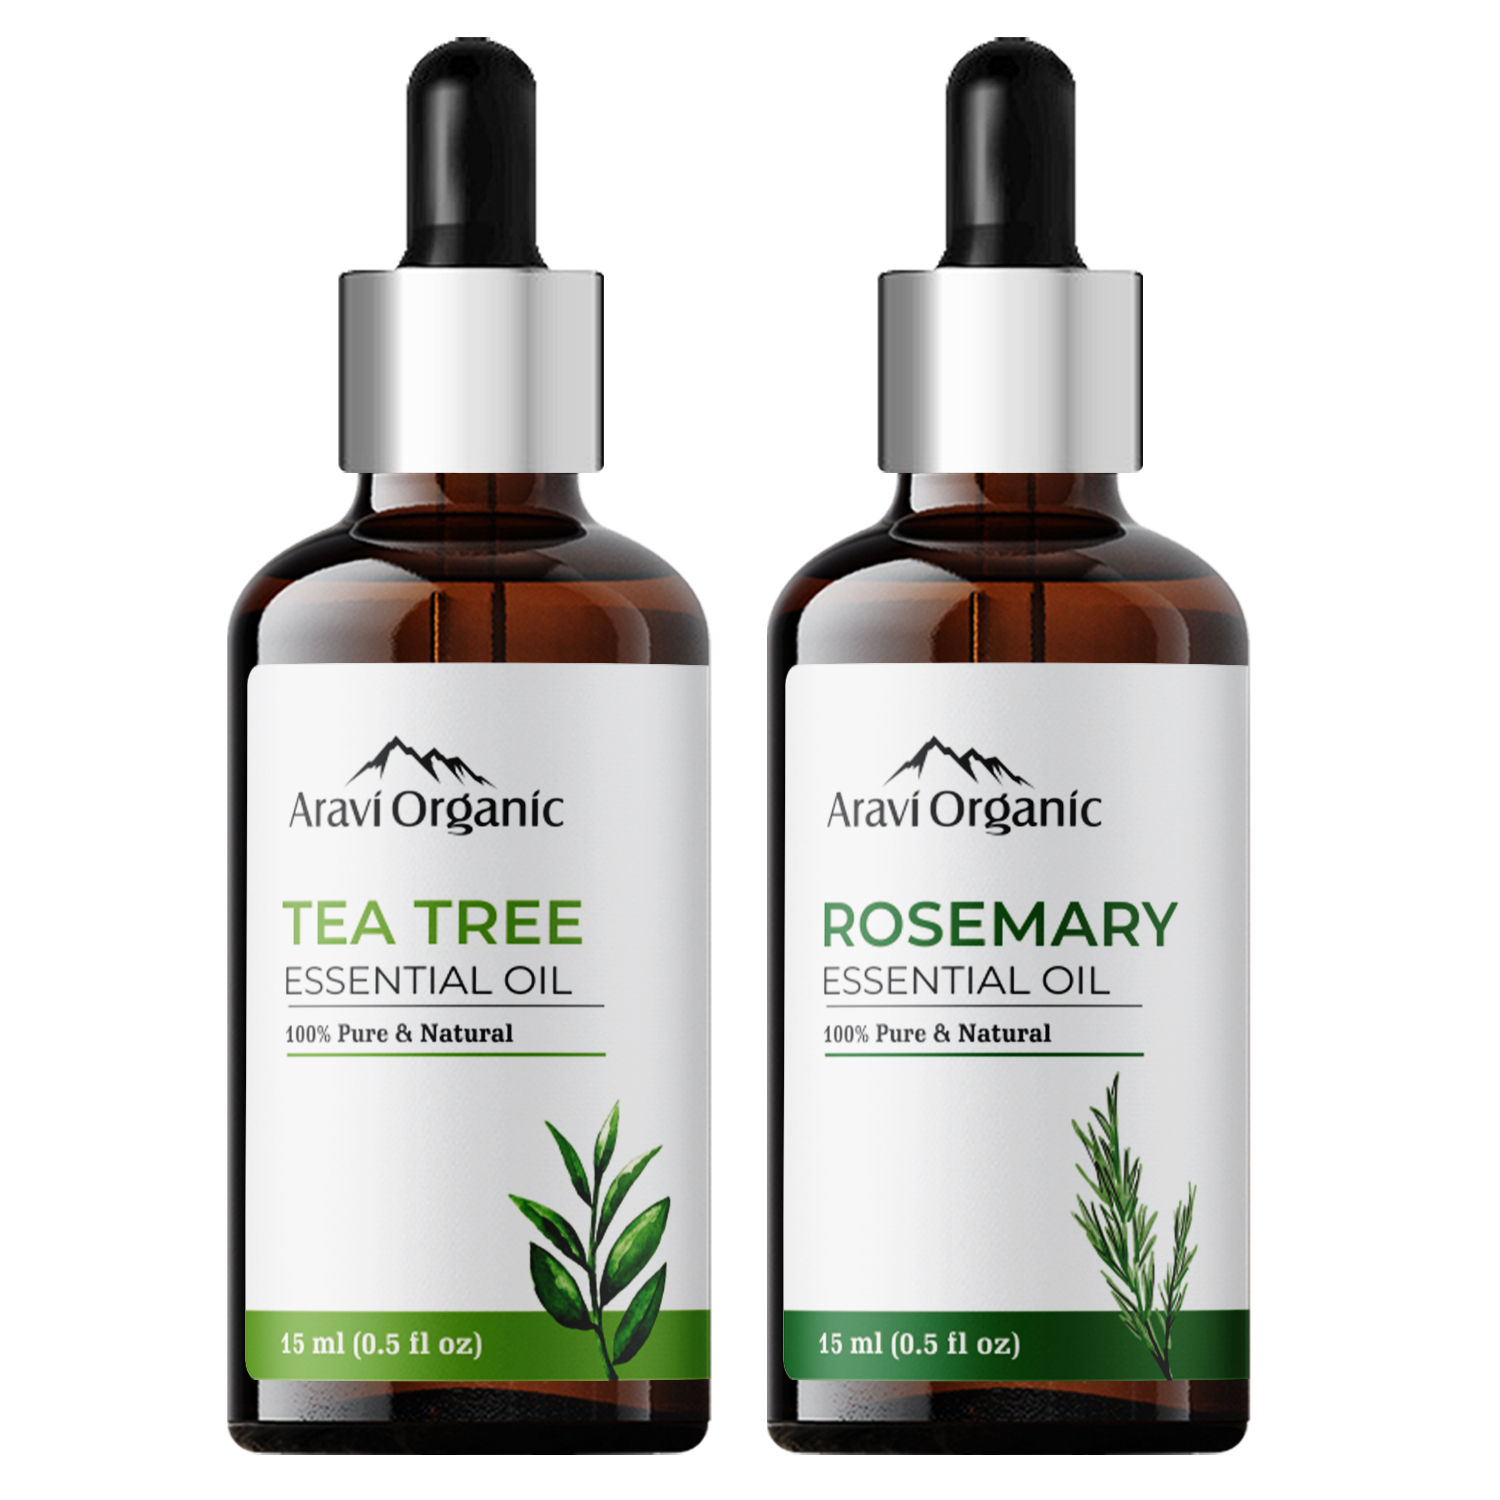 Aravi Organic Tea Tree and Rosemary Essential Oil Combo Pack